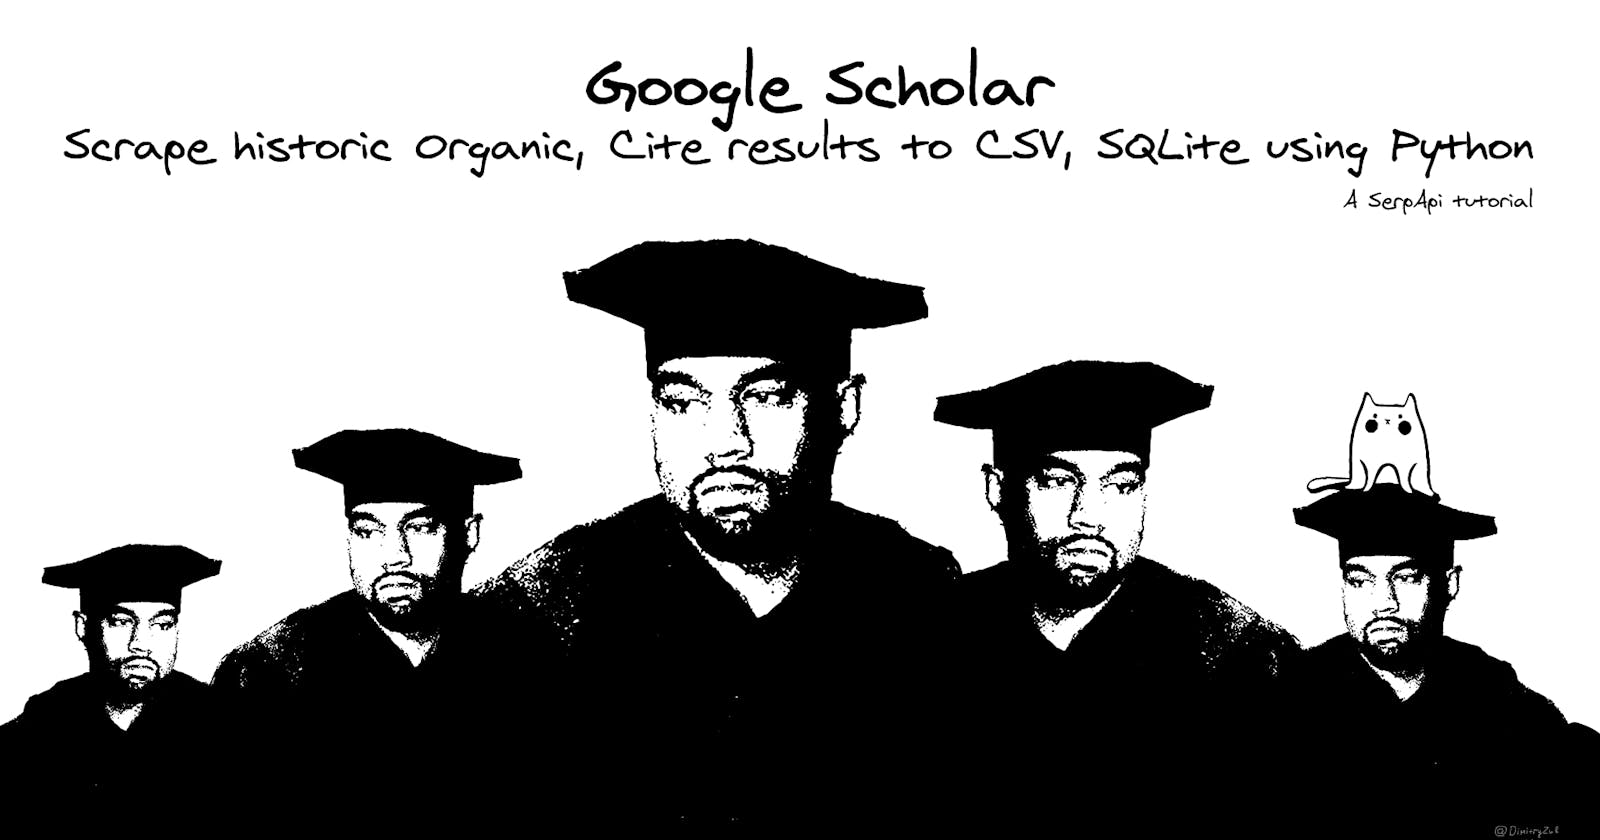 Scrape historic Google Scholar Organic, Cite results using Python